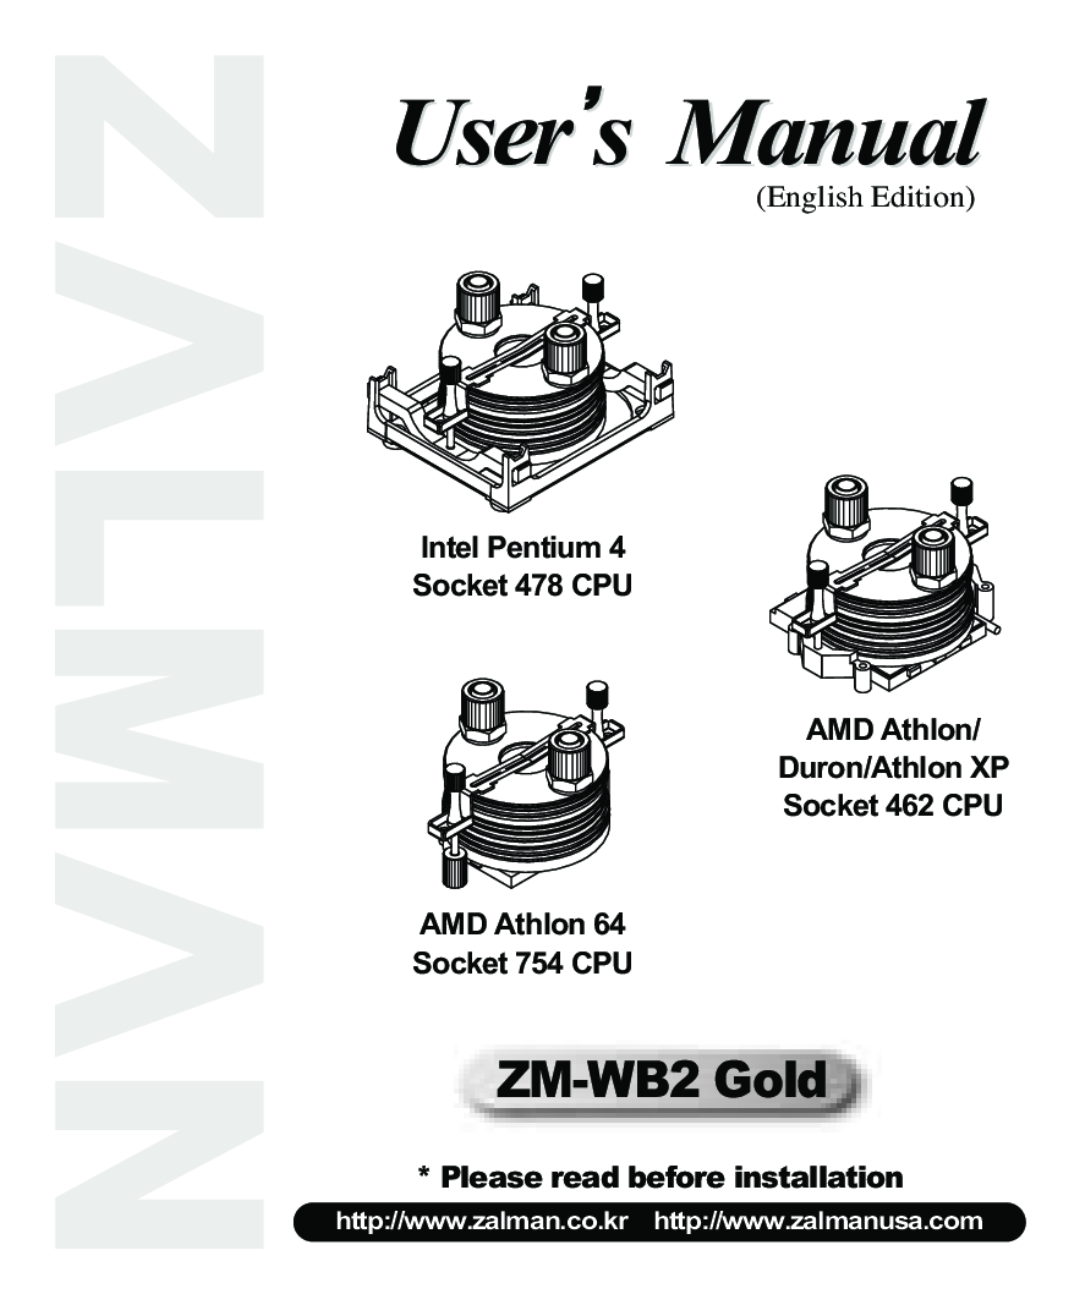 ZALMAN Socket 462 CPU manual Intel Pentium Socket 478 CPU AMD Athlon Duron/Athlon XP, Please read before installation 